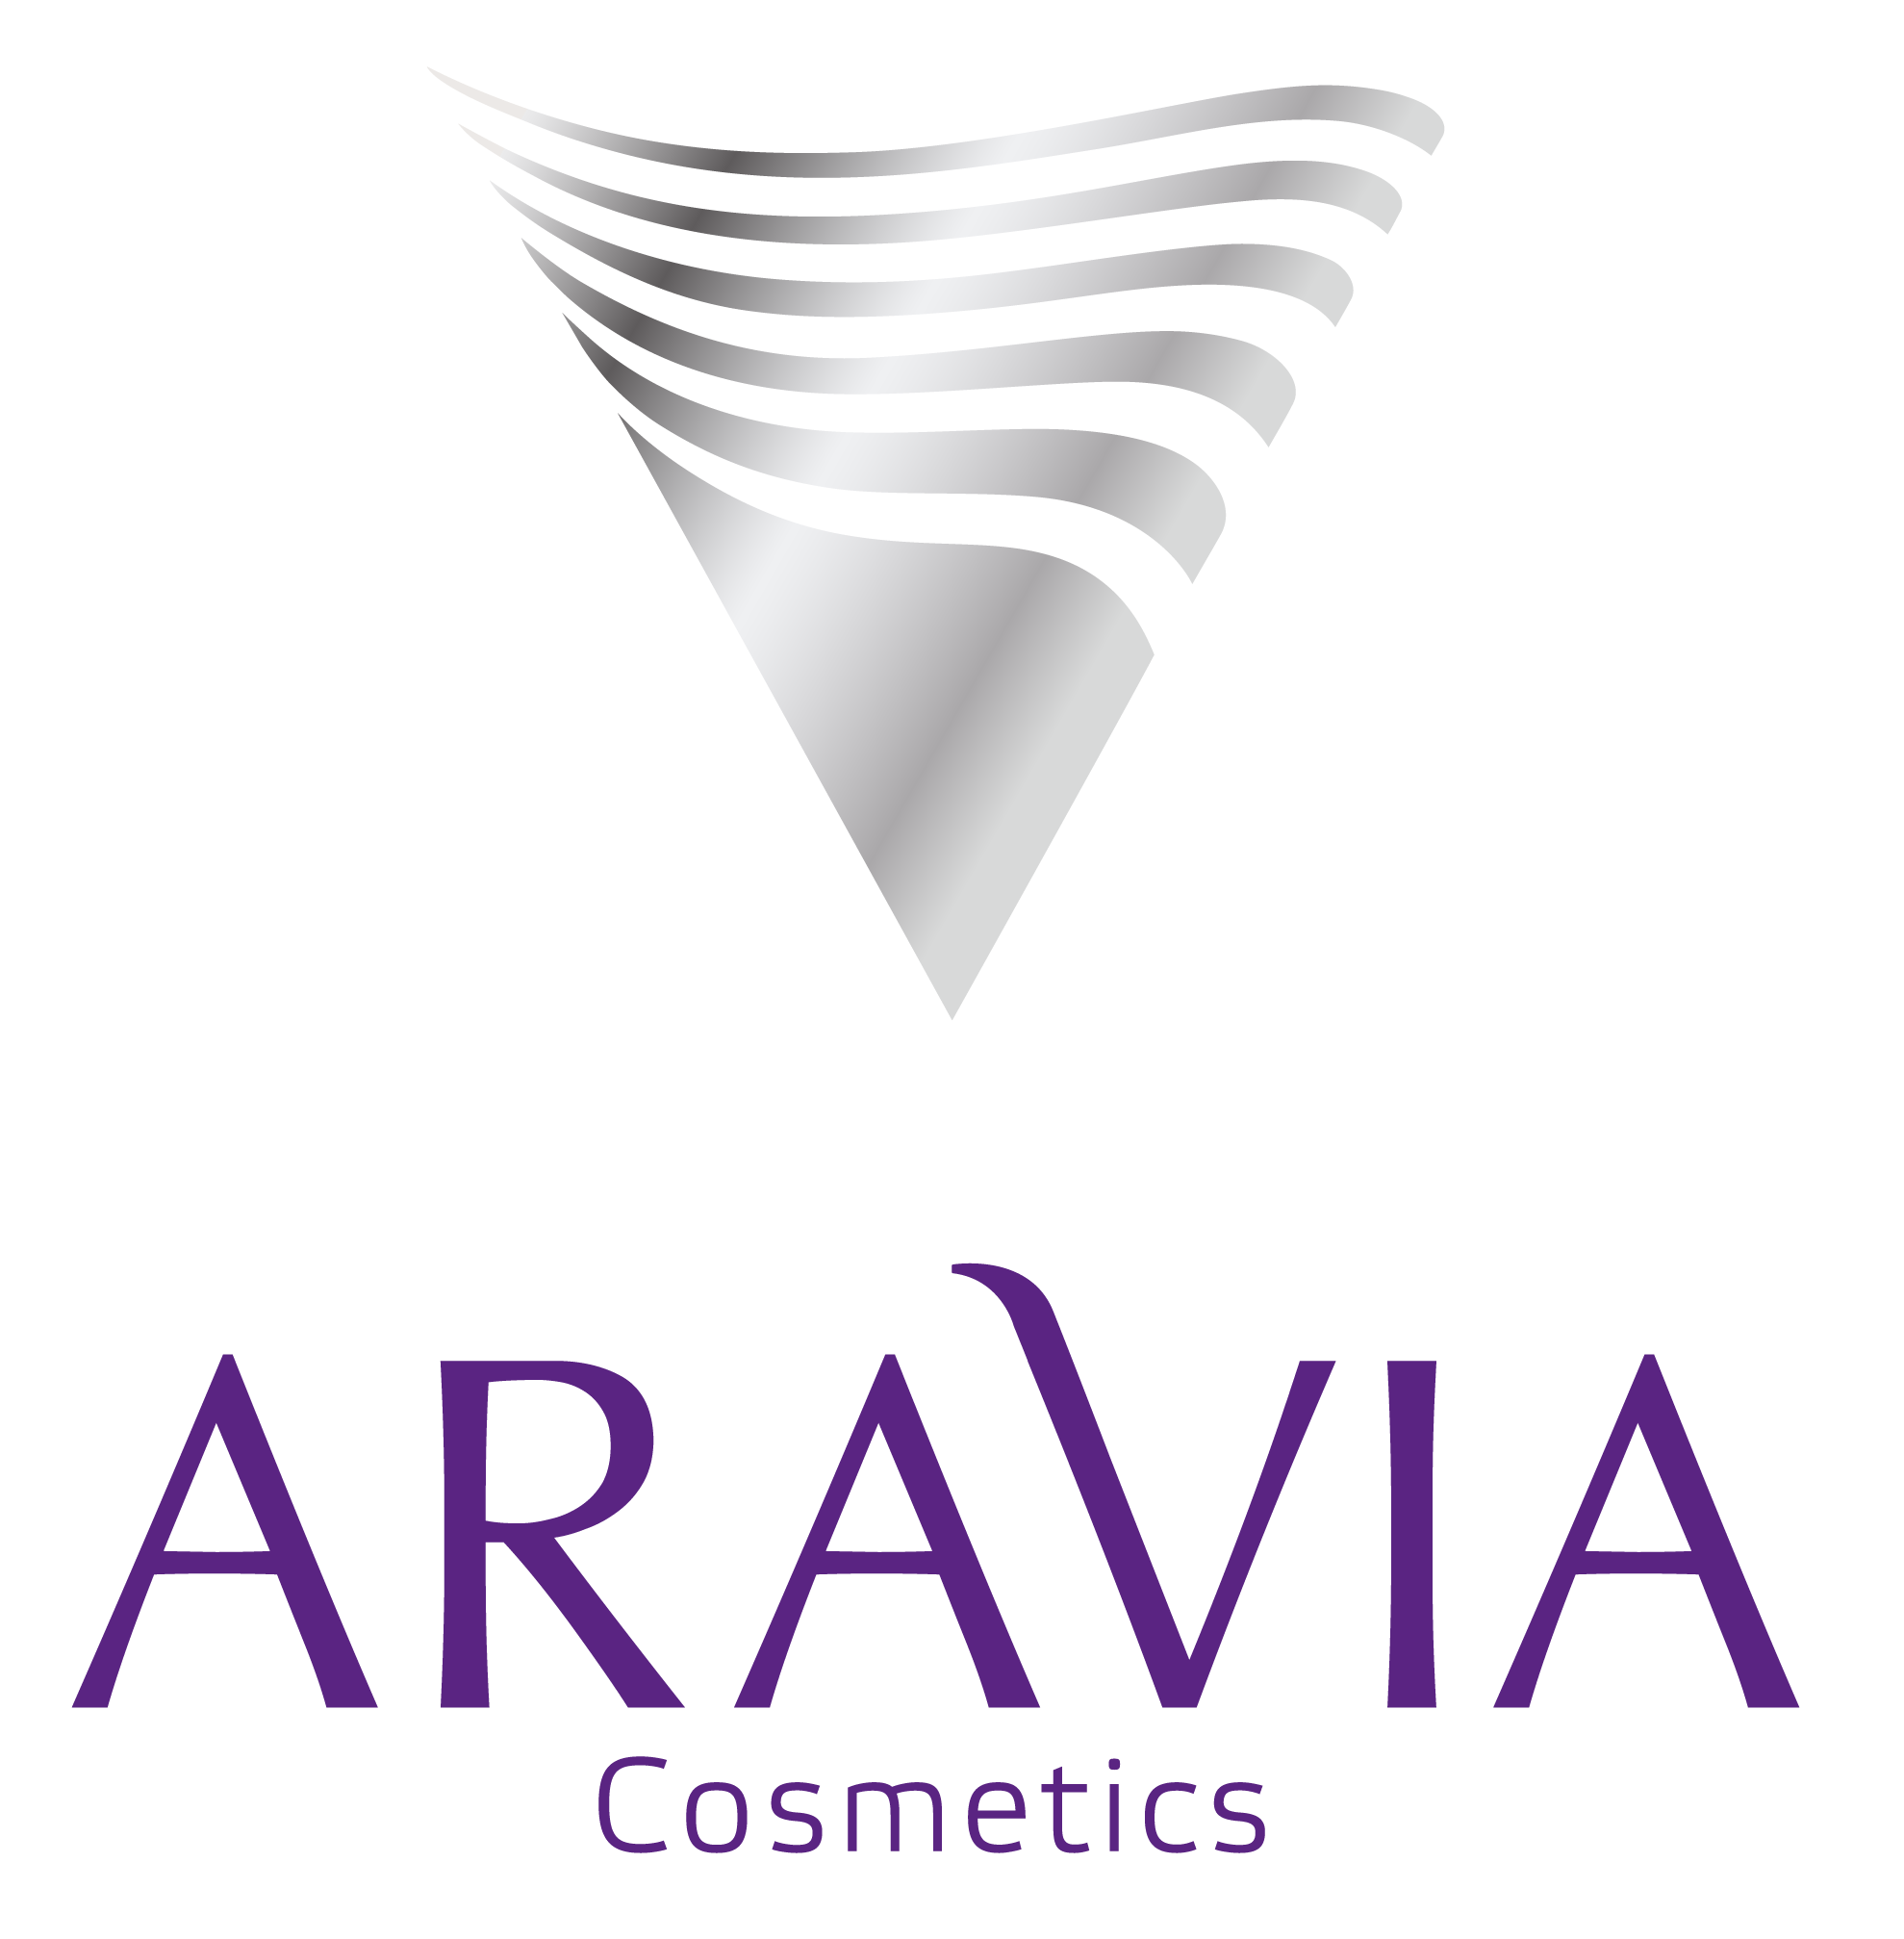 Aravia Cosmetics